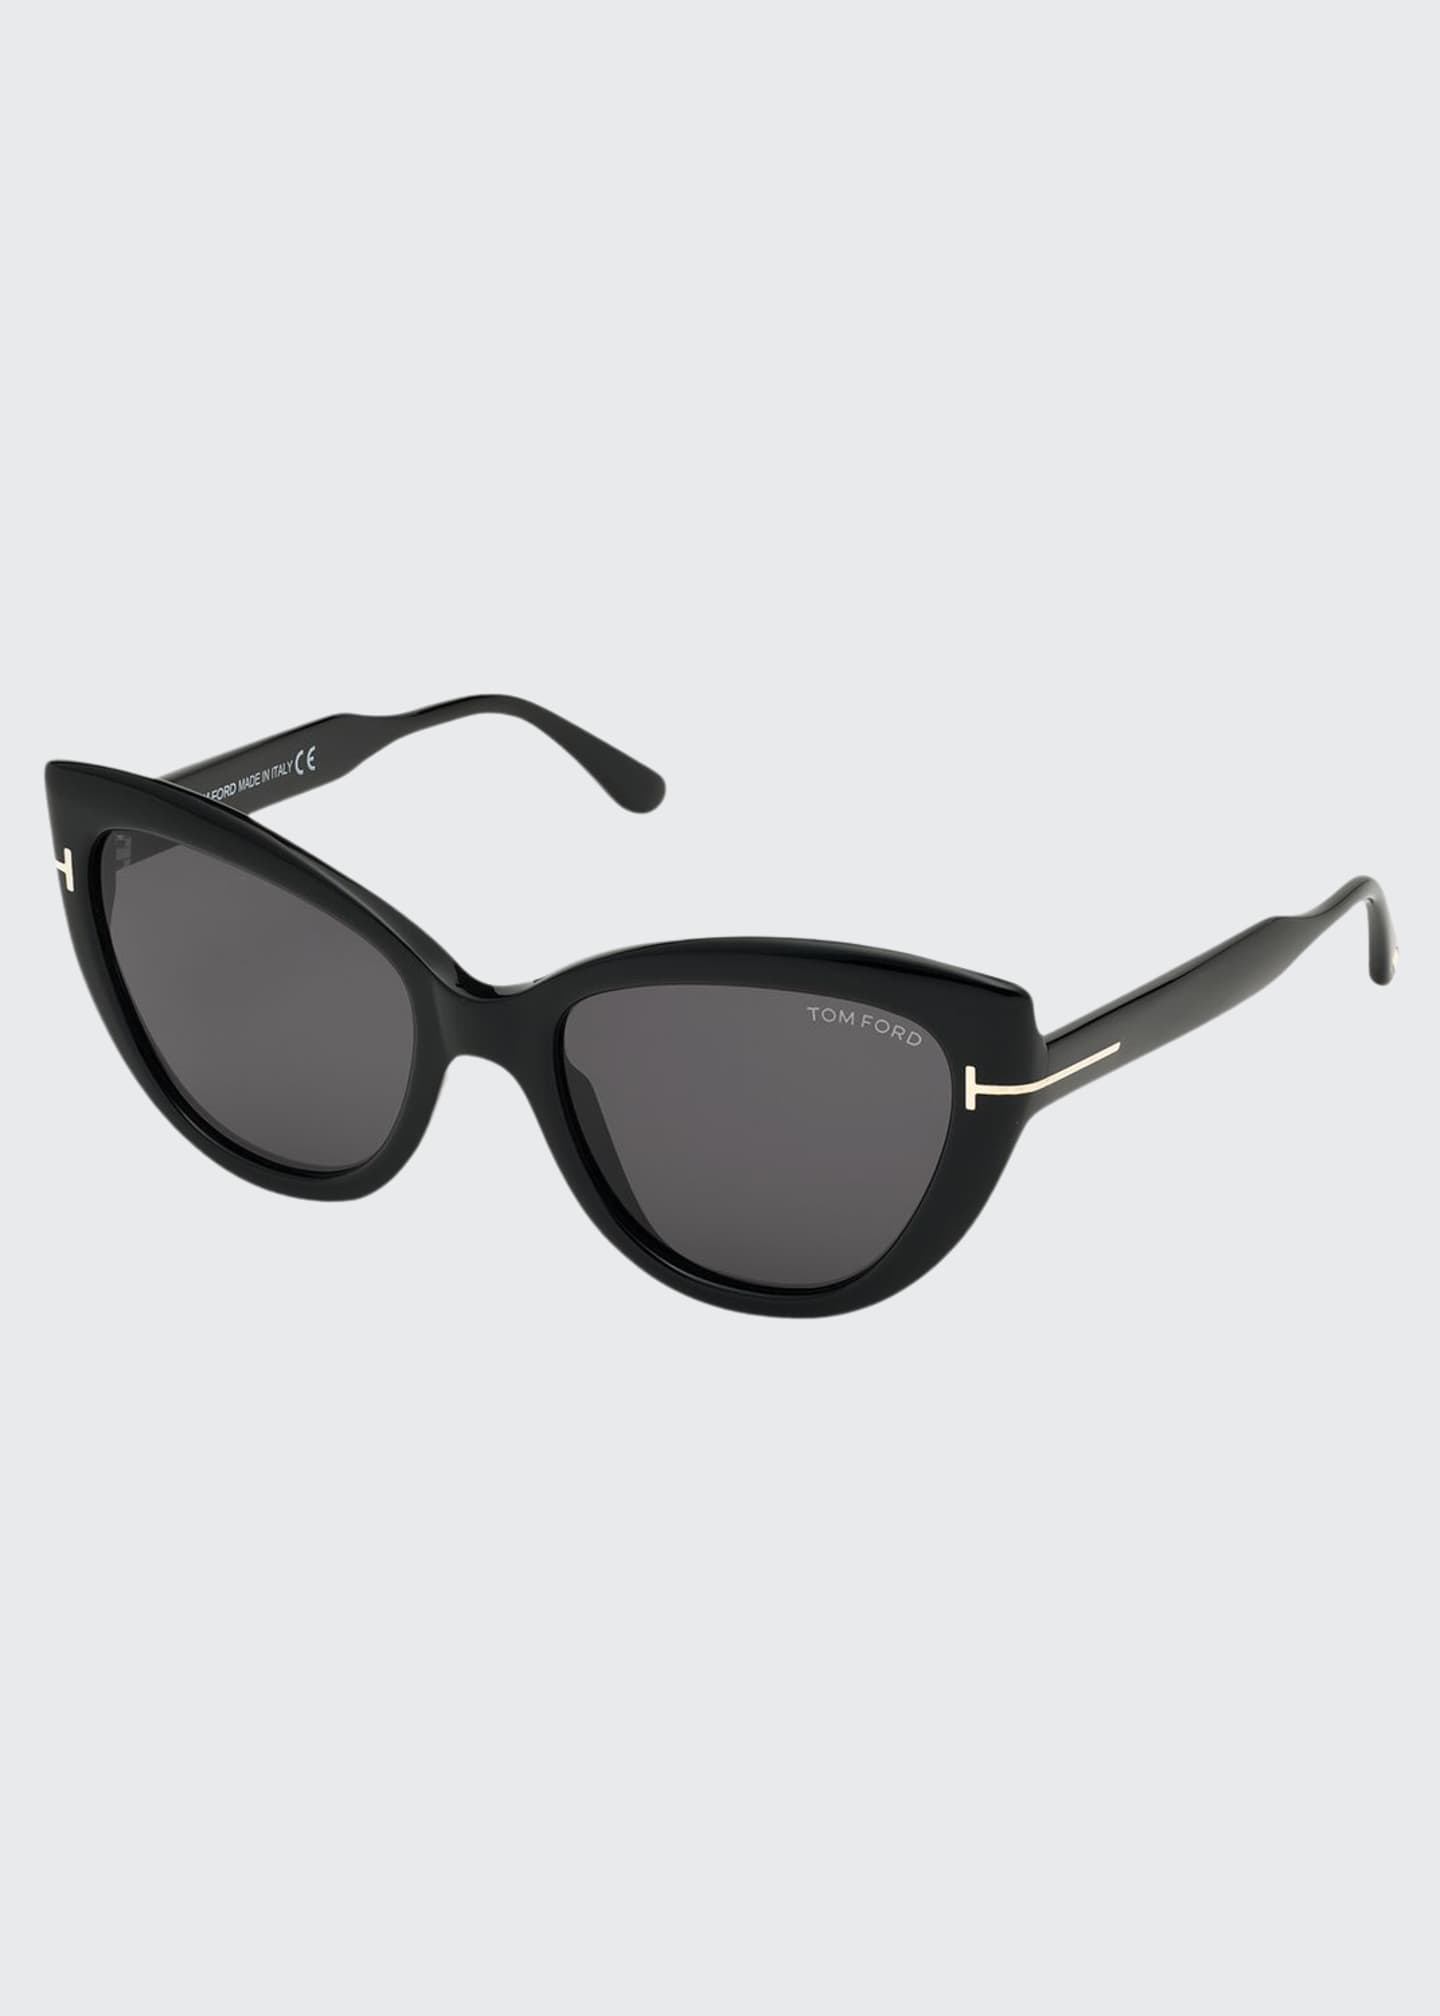 Tom Ford Anya Cat Eye Polarized Sunglasses Bergdorf Goodman